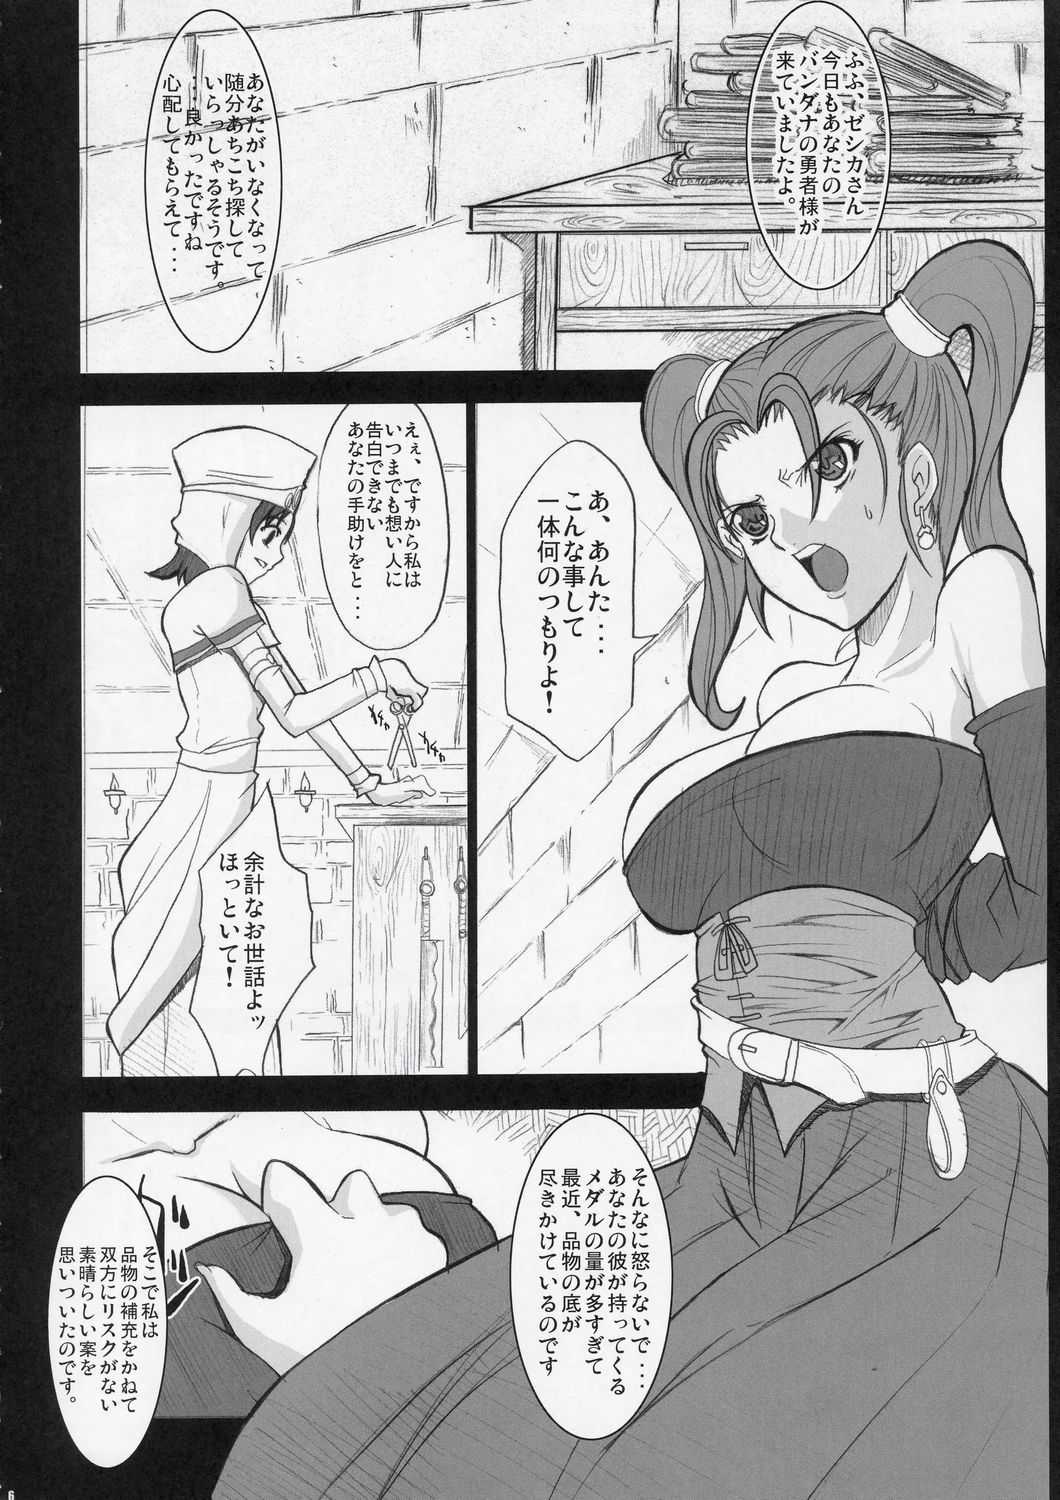 [C67][Youkai Tamanokoshi (Chiro)] Jessica Side [Dragon Quest VIII] [C67][ようかい玉の輿 (ちろ)] Jessica Side [ドラゴンクエスト VIII]